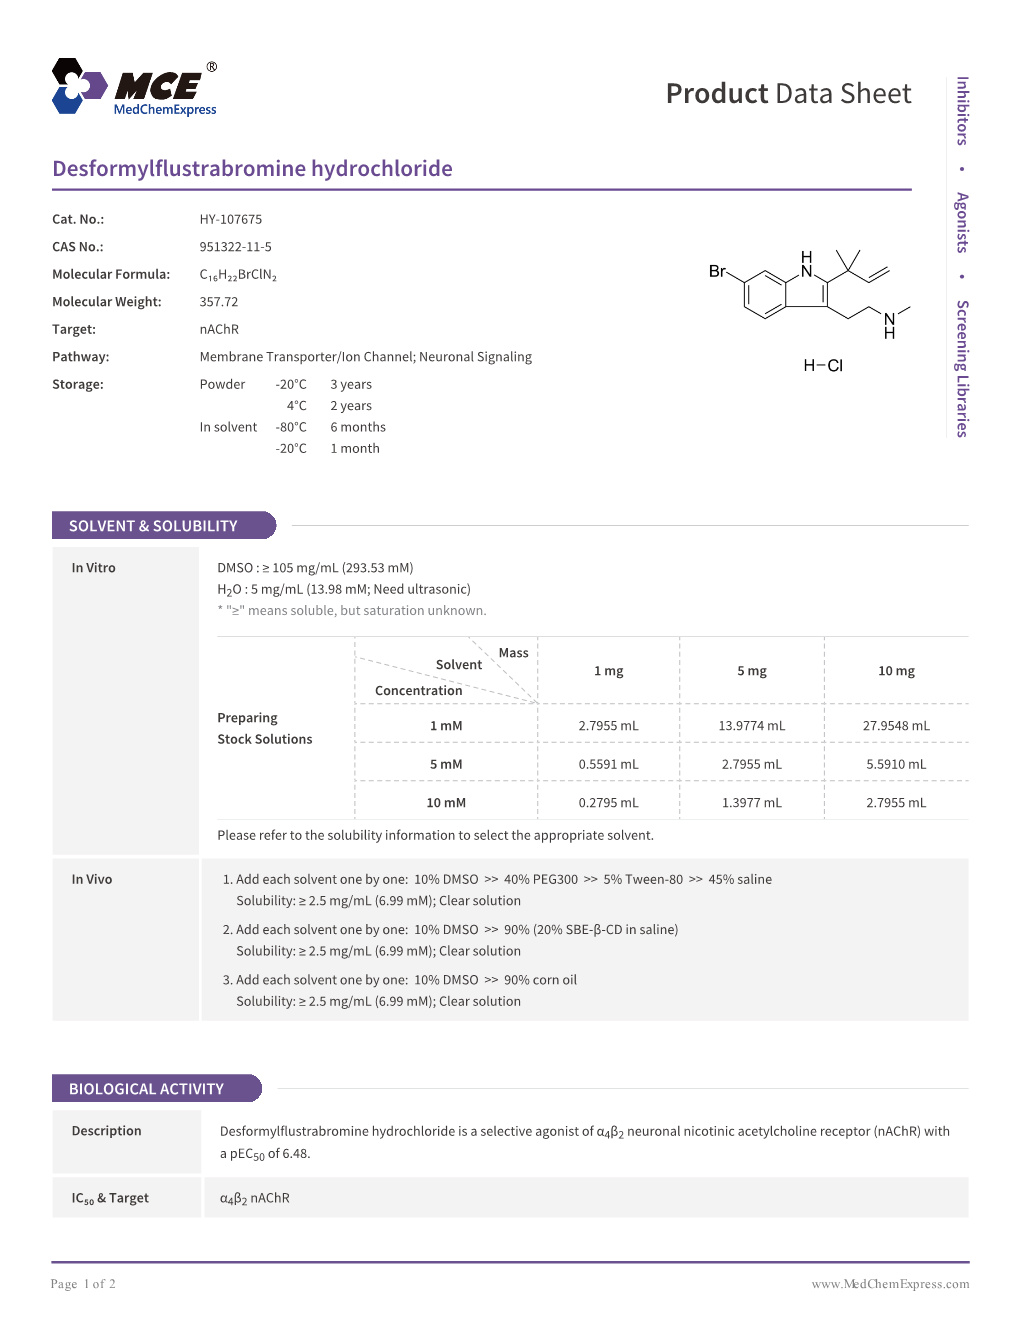 Desformylflustrabromine Hydrochloride | Medchemexpress